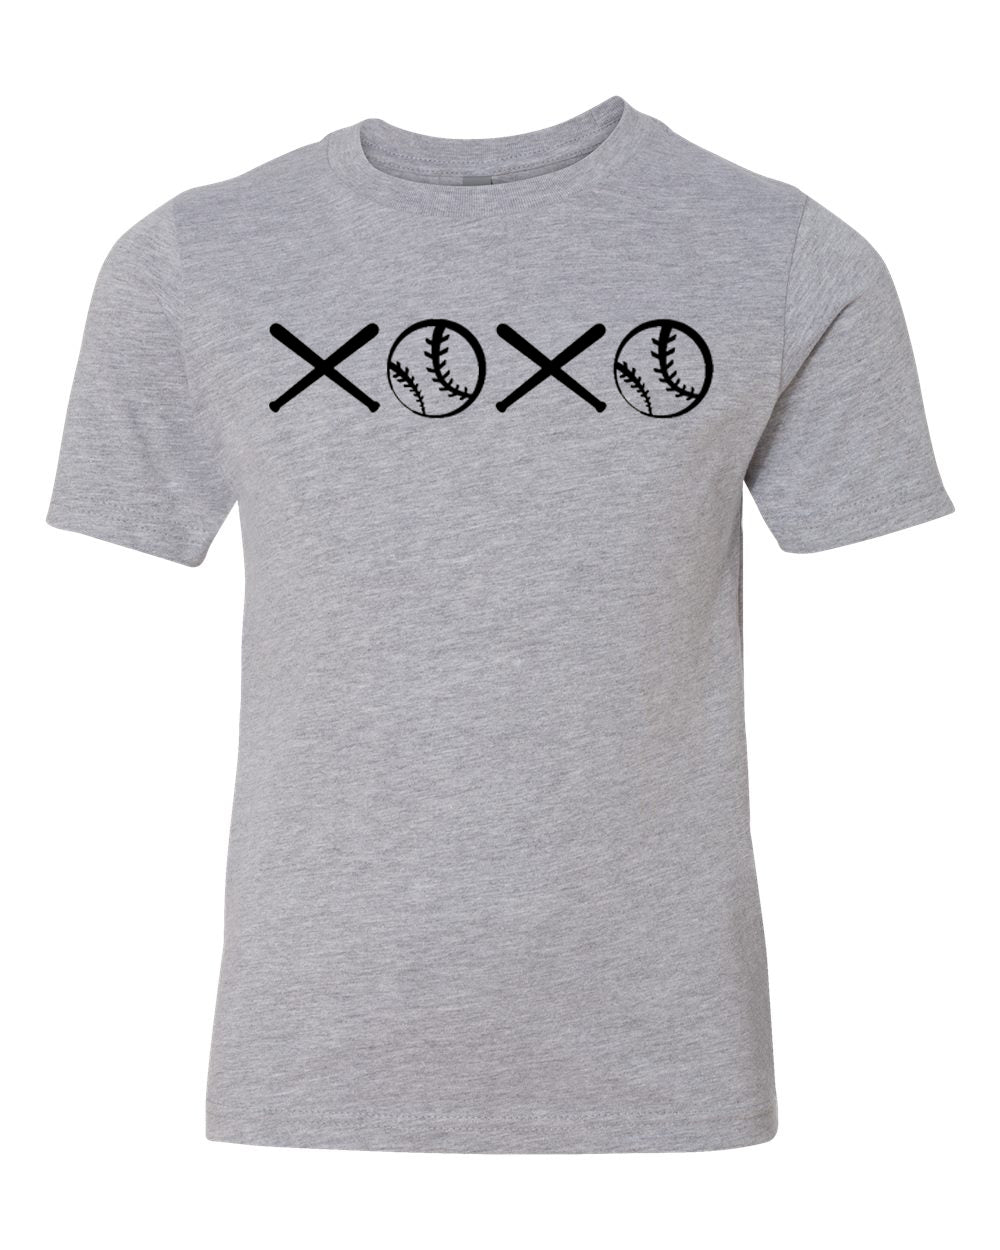 Baseball XOXO Youth T-Shirt